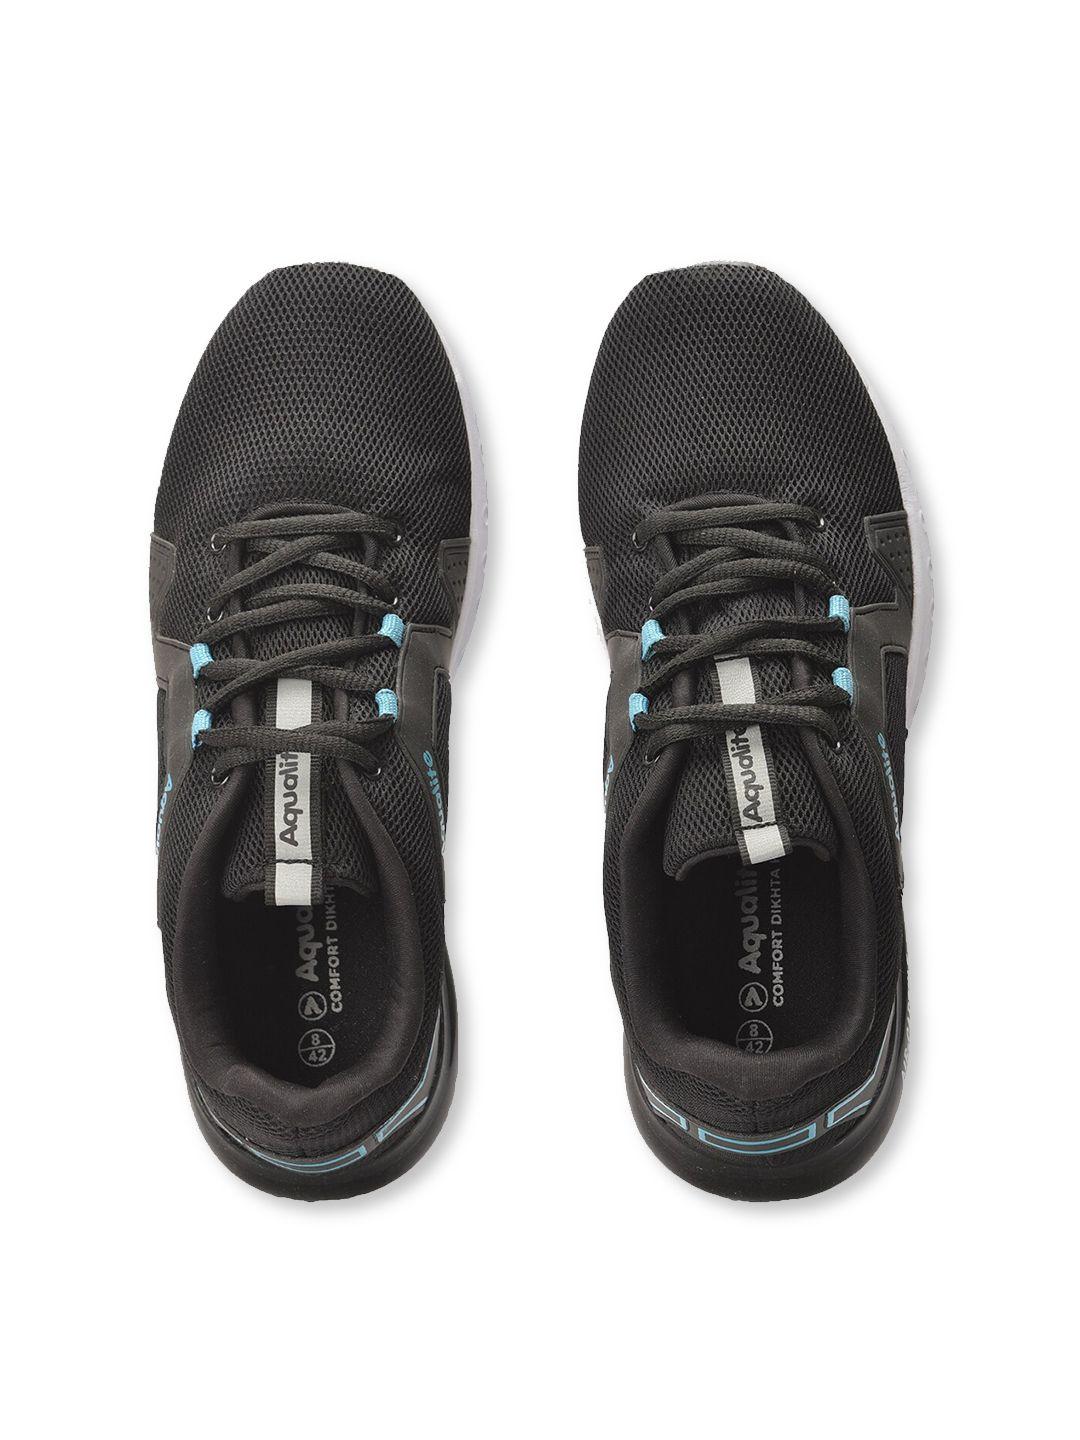 aqualite-men-charcoal-running-non-marking-shoes